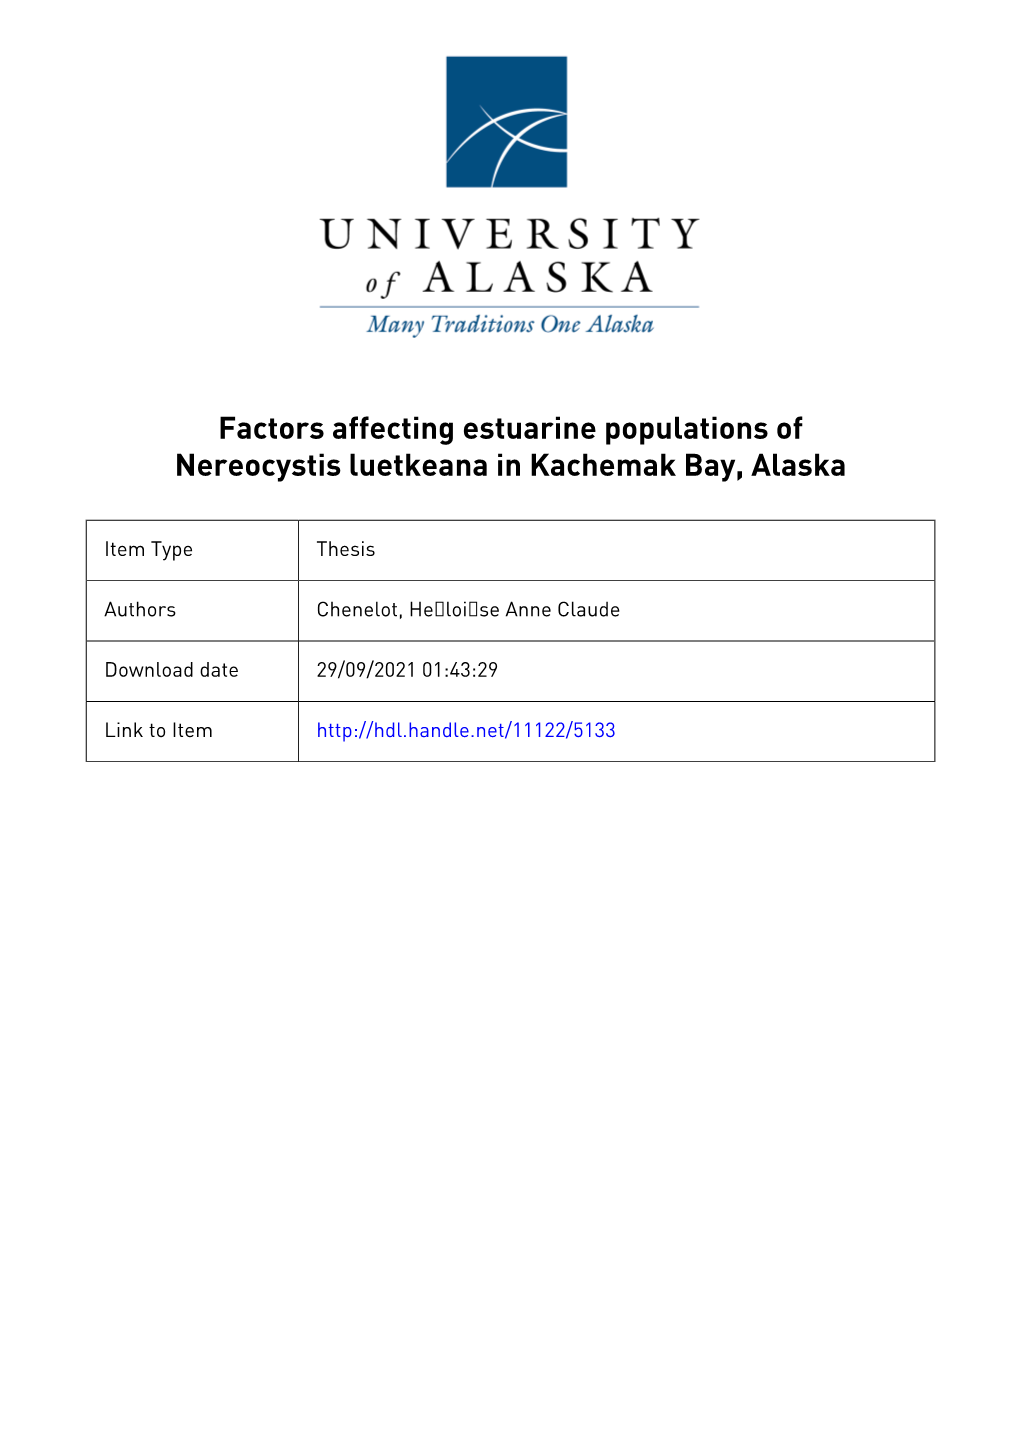 Factors Affecting Estuarine Populations of Nereocystis Luetkeana in Kachemak Bay, Alaska